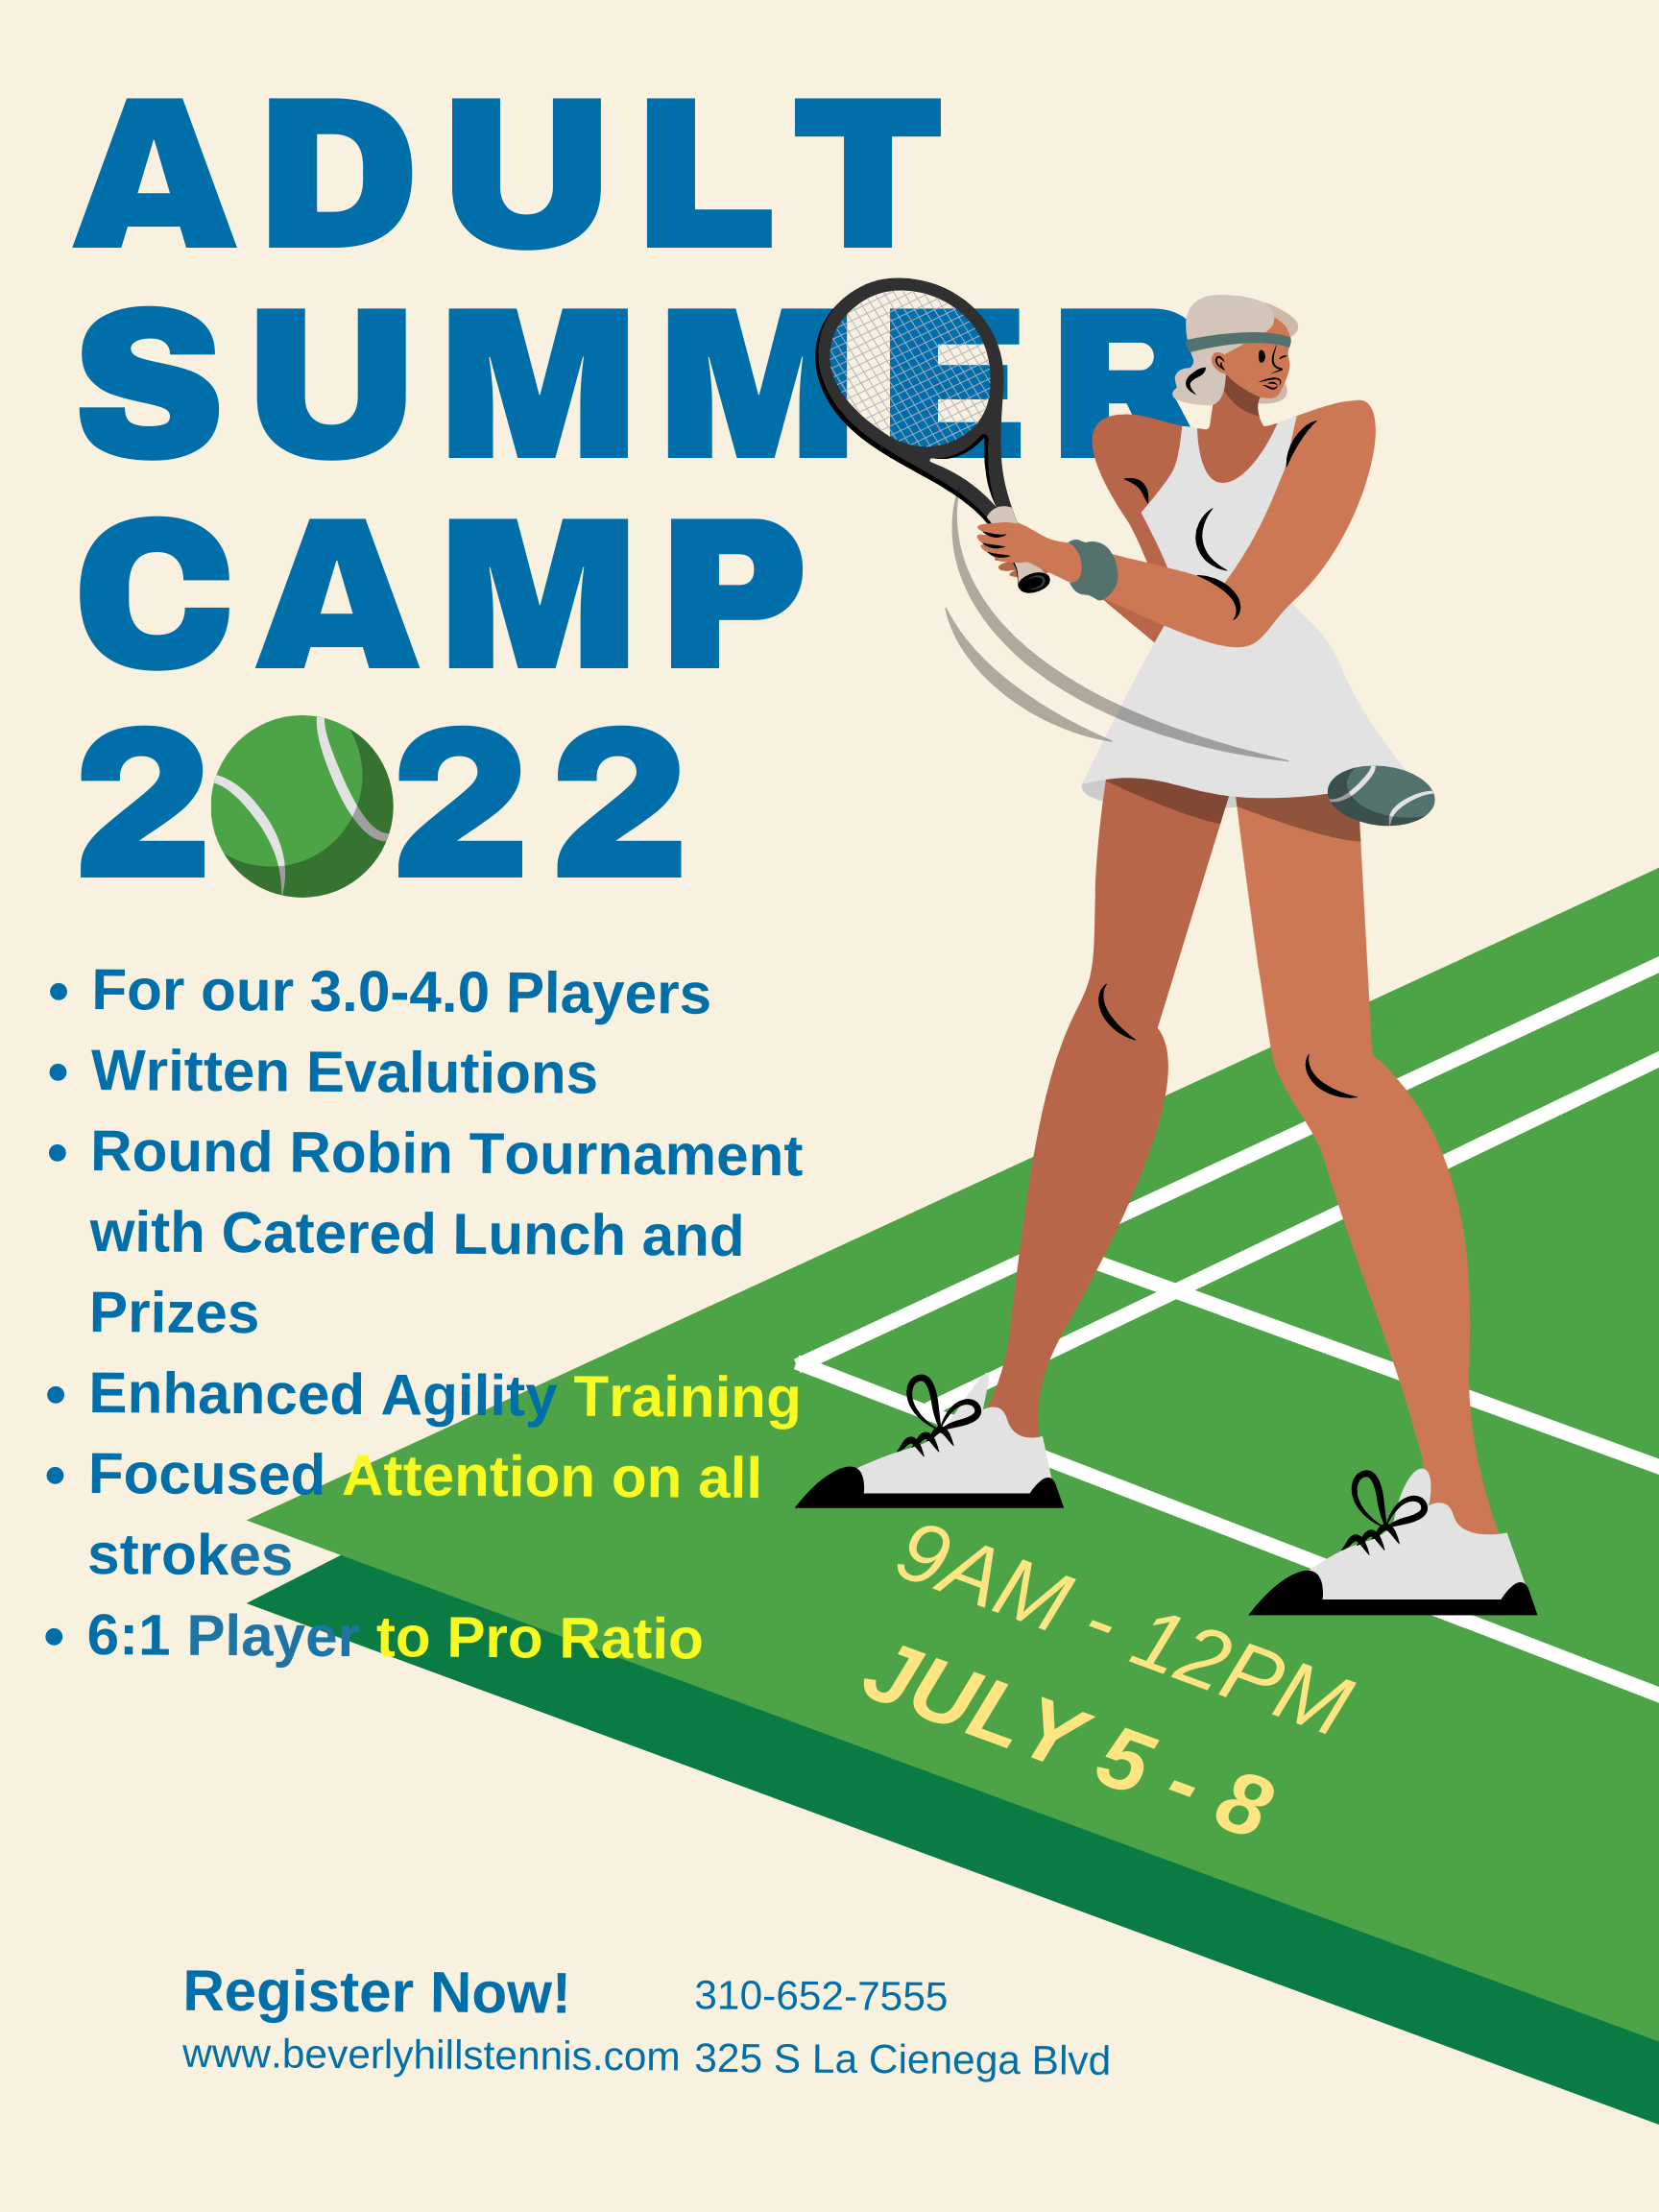 ADULT SUMMER CAMP 2022